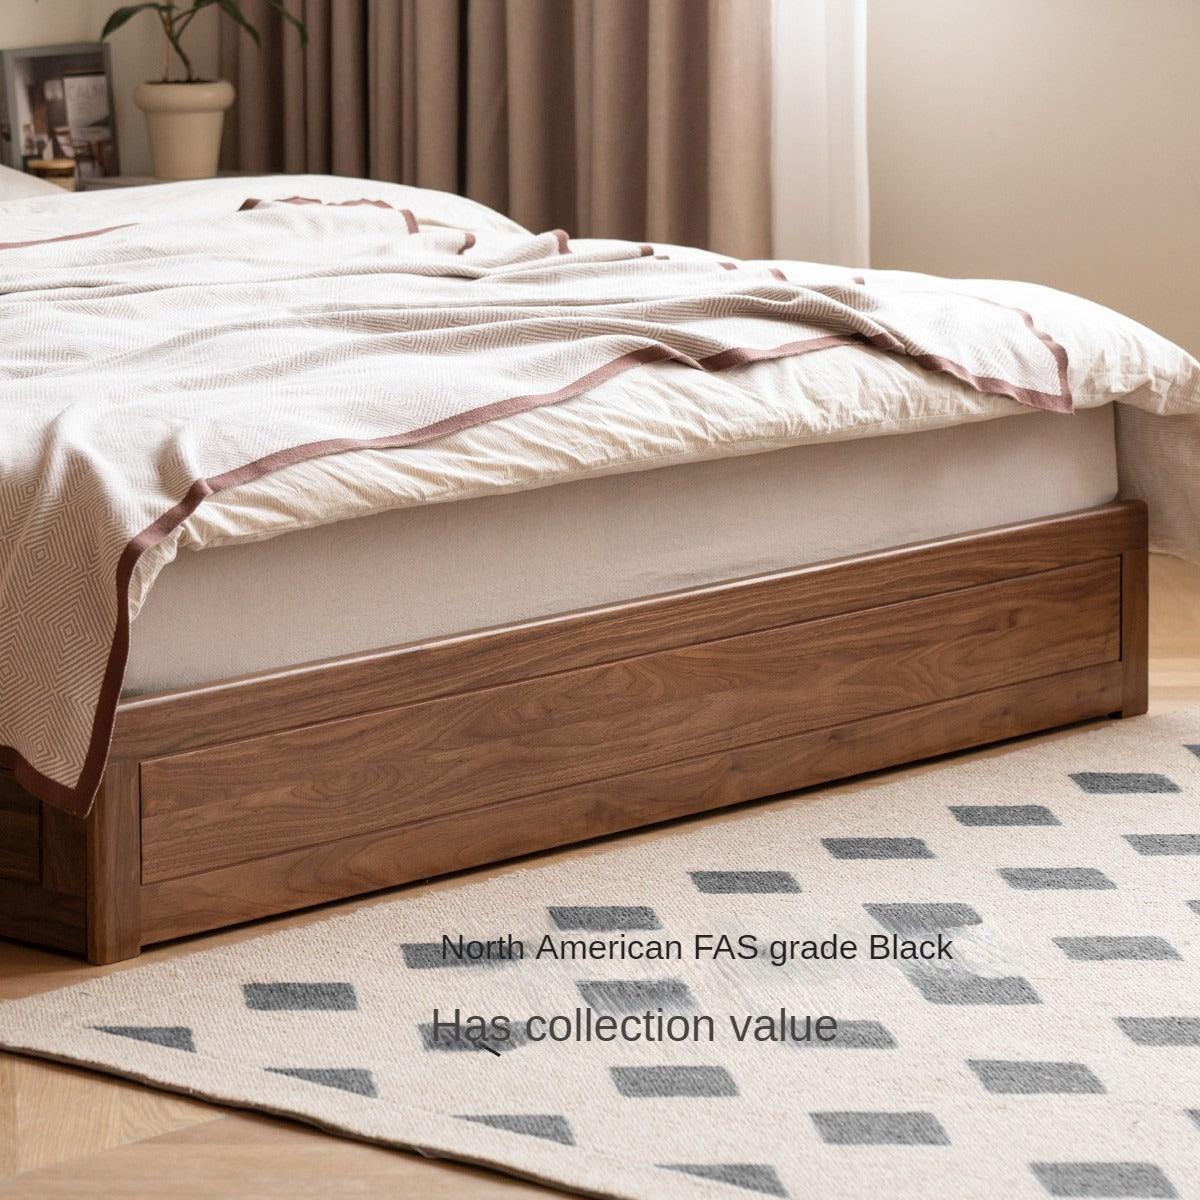 Black walnut solid wood storage box bed technology cloth soft back_)